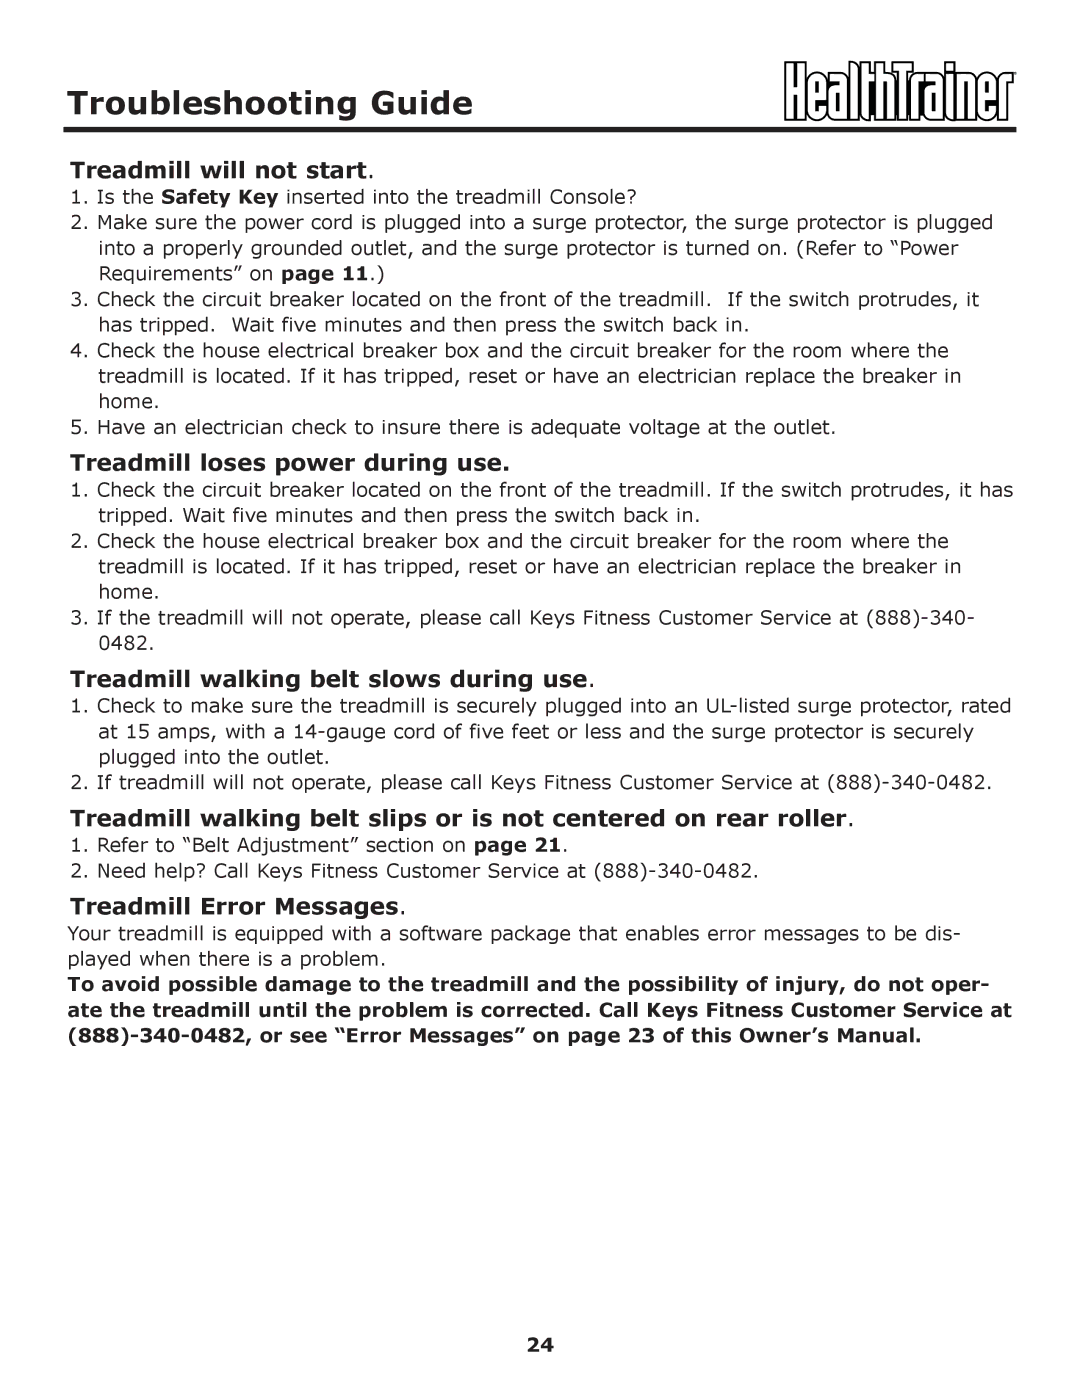 Keys Fitness HT-ELITE owner manual Troubleshooting Guide, Treadmill will not start 